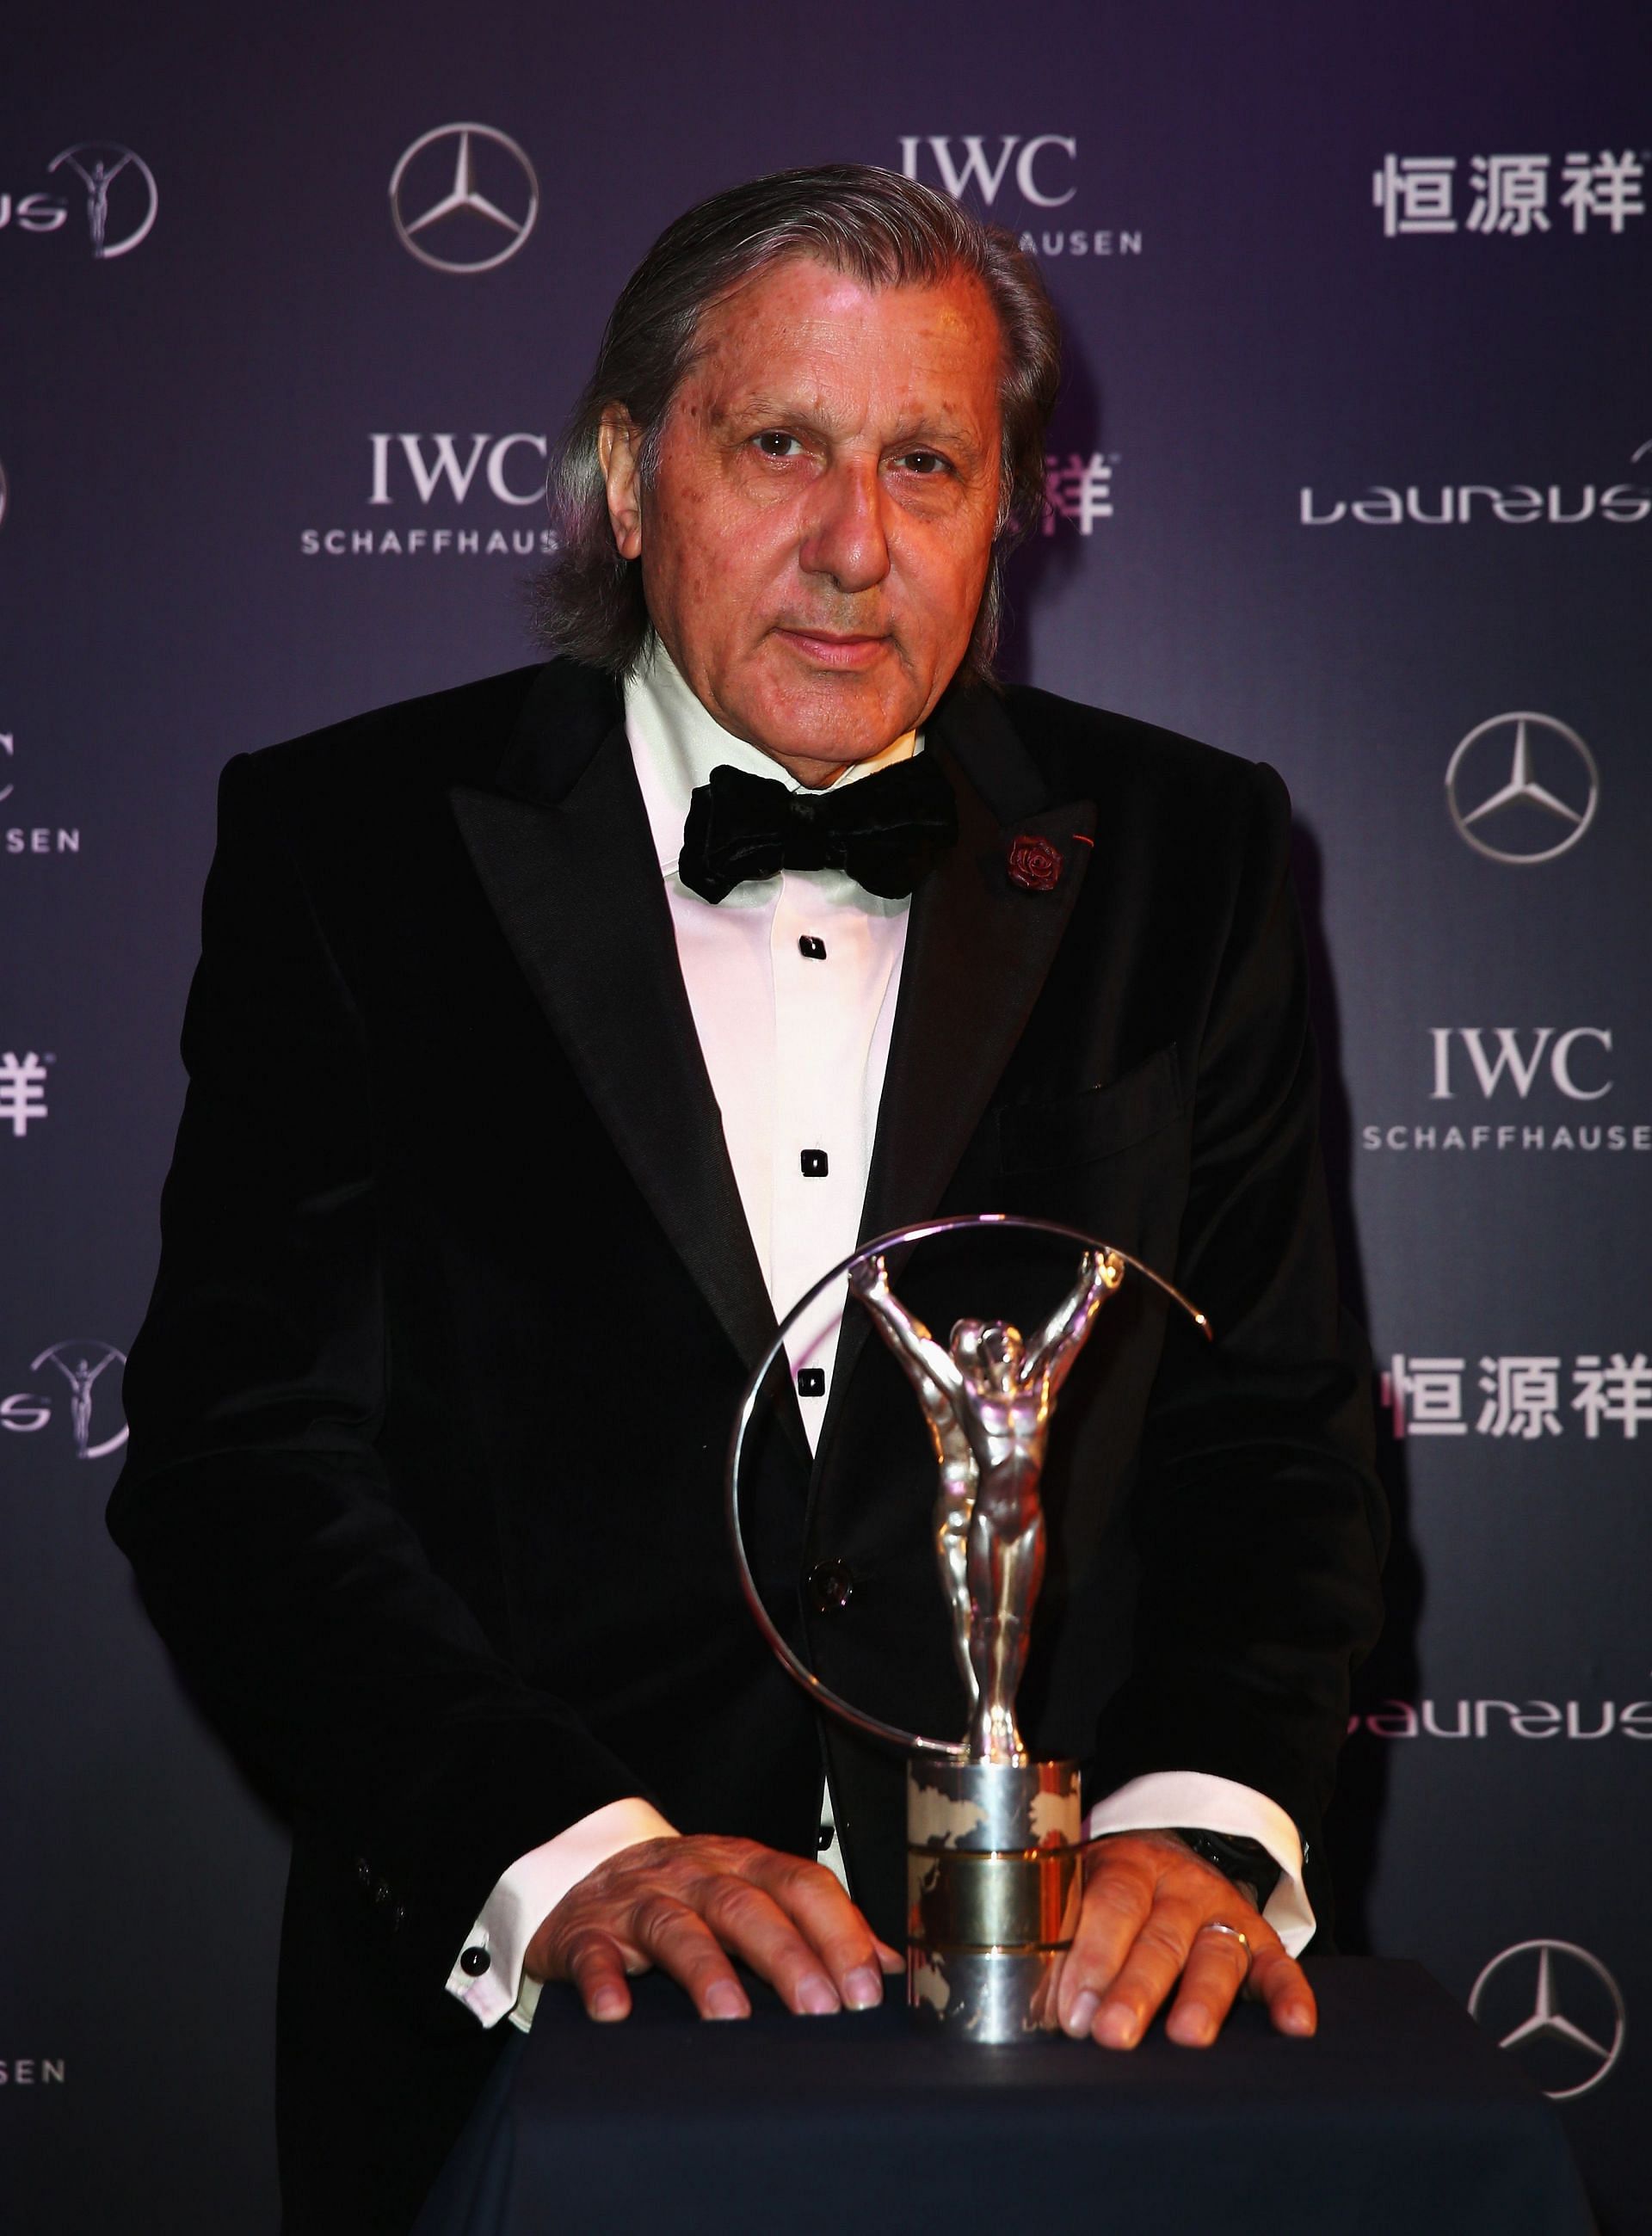 Ilie Nastase at the 2015 Laureus awards